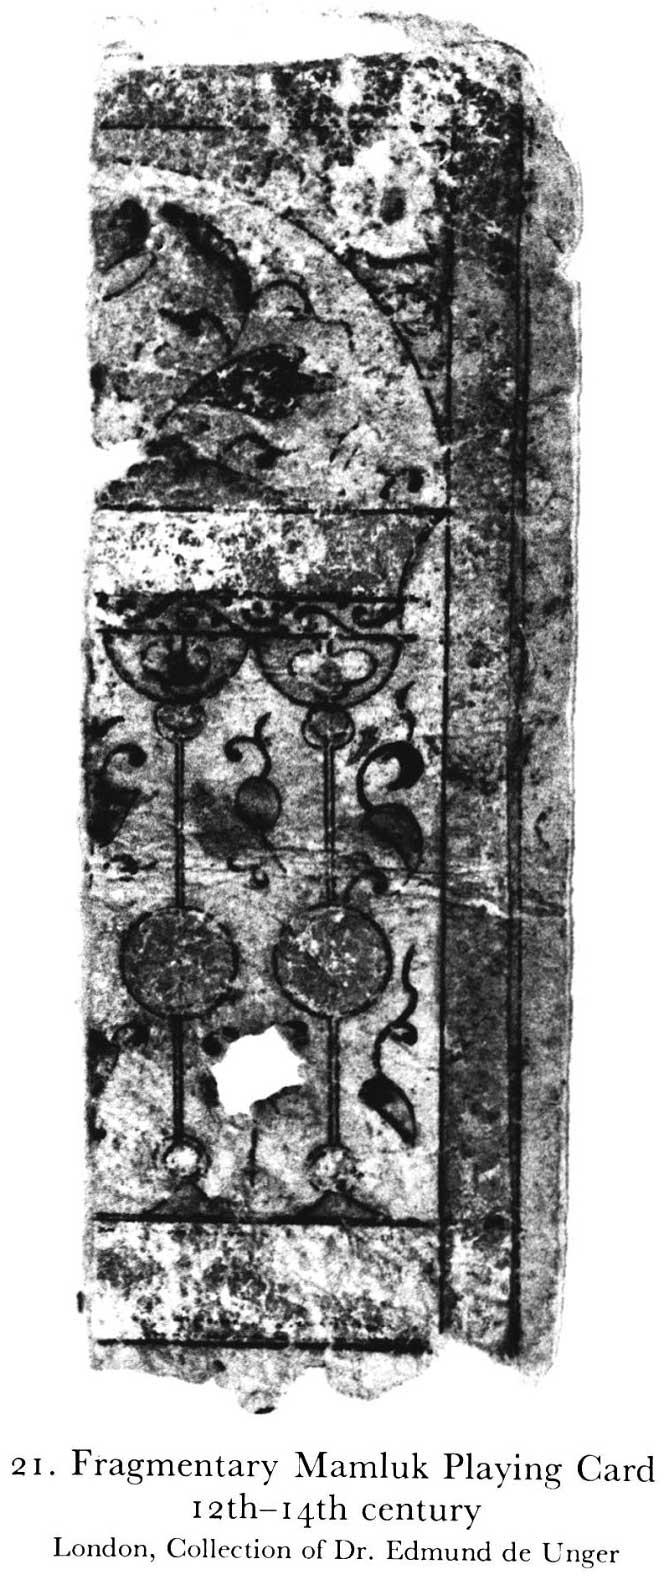 Fragmentary Mamluk playing cards, 12th-14th century